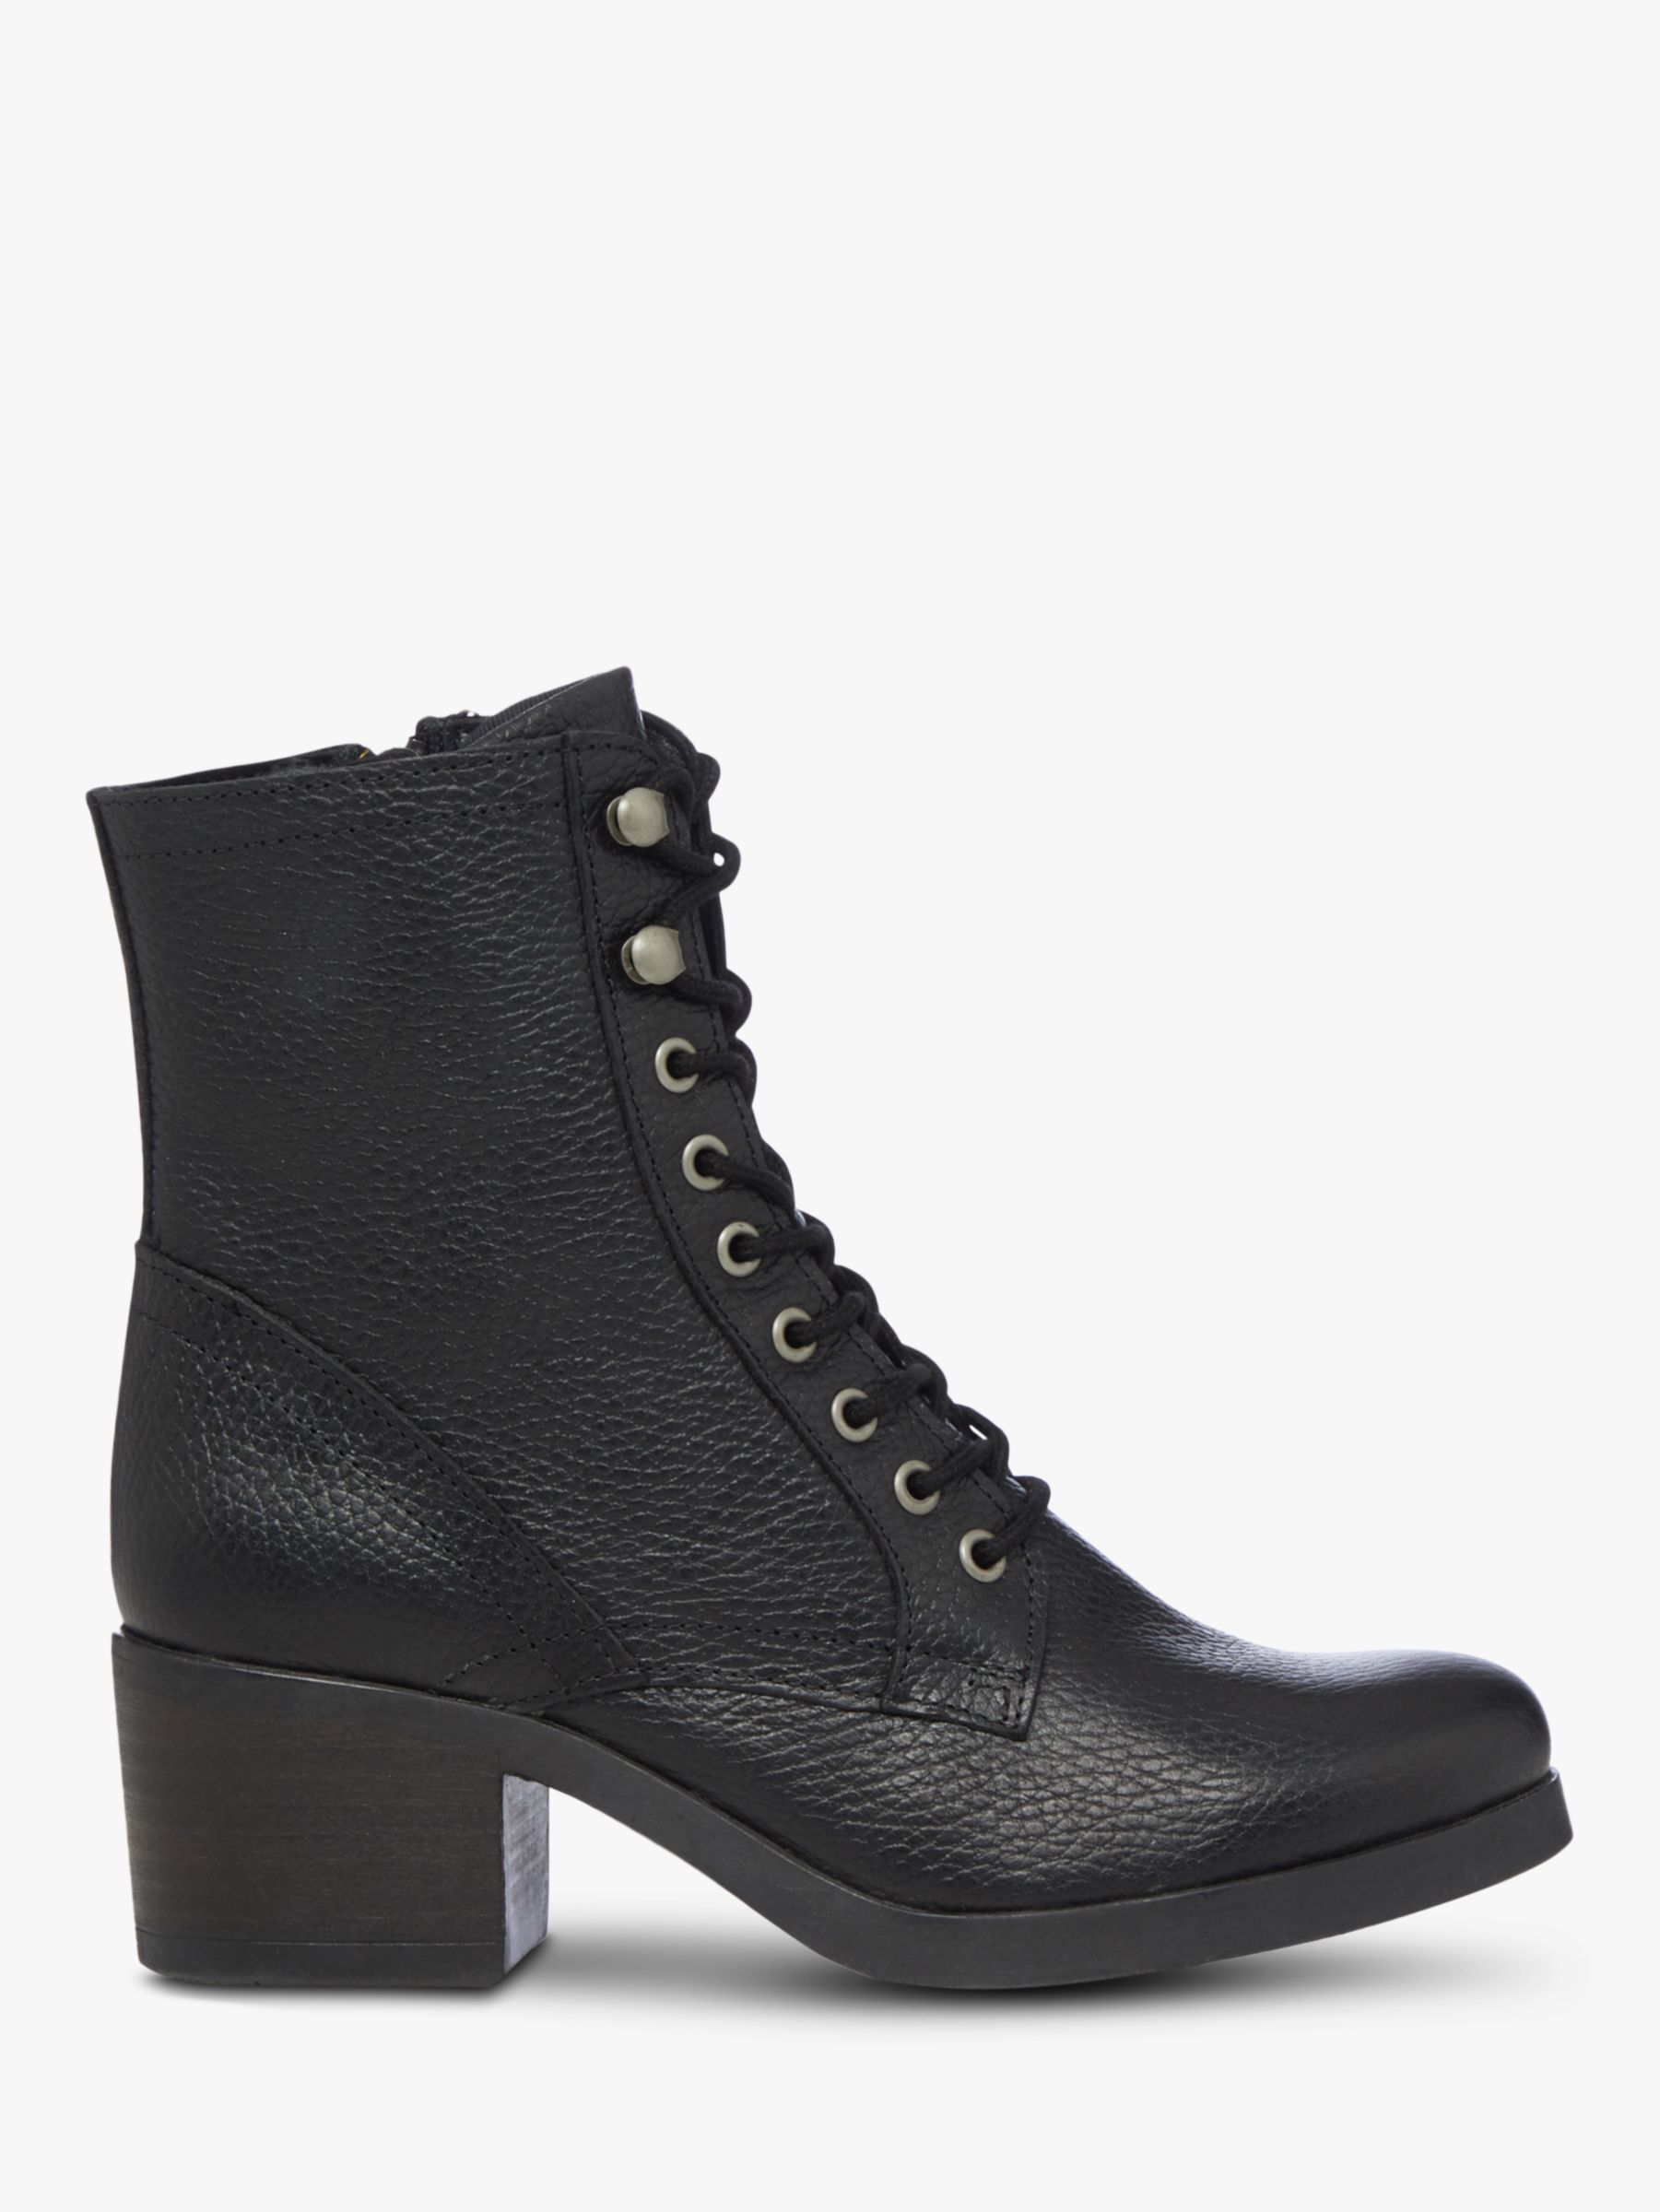 next ladies black ankle boots